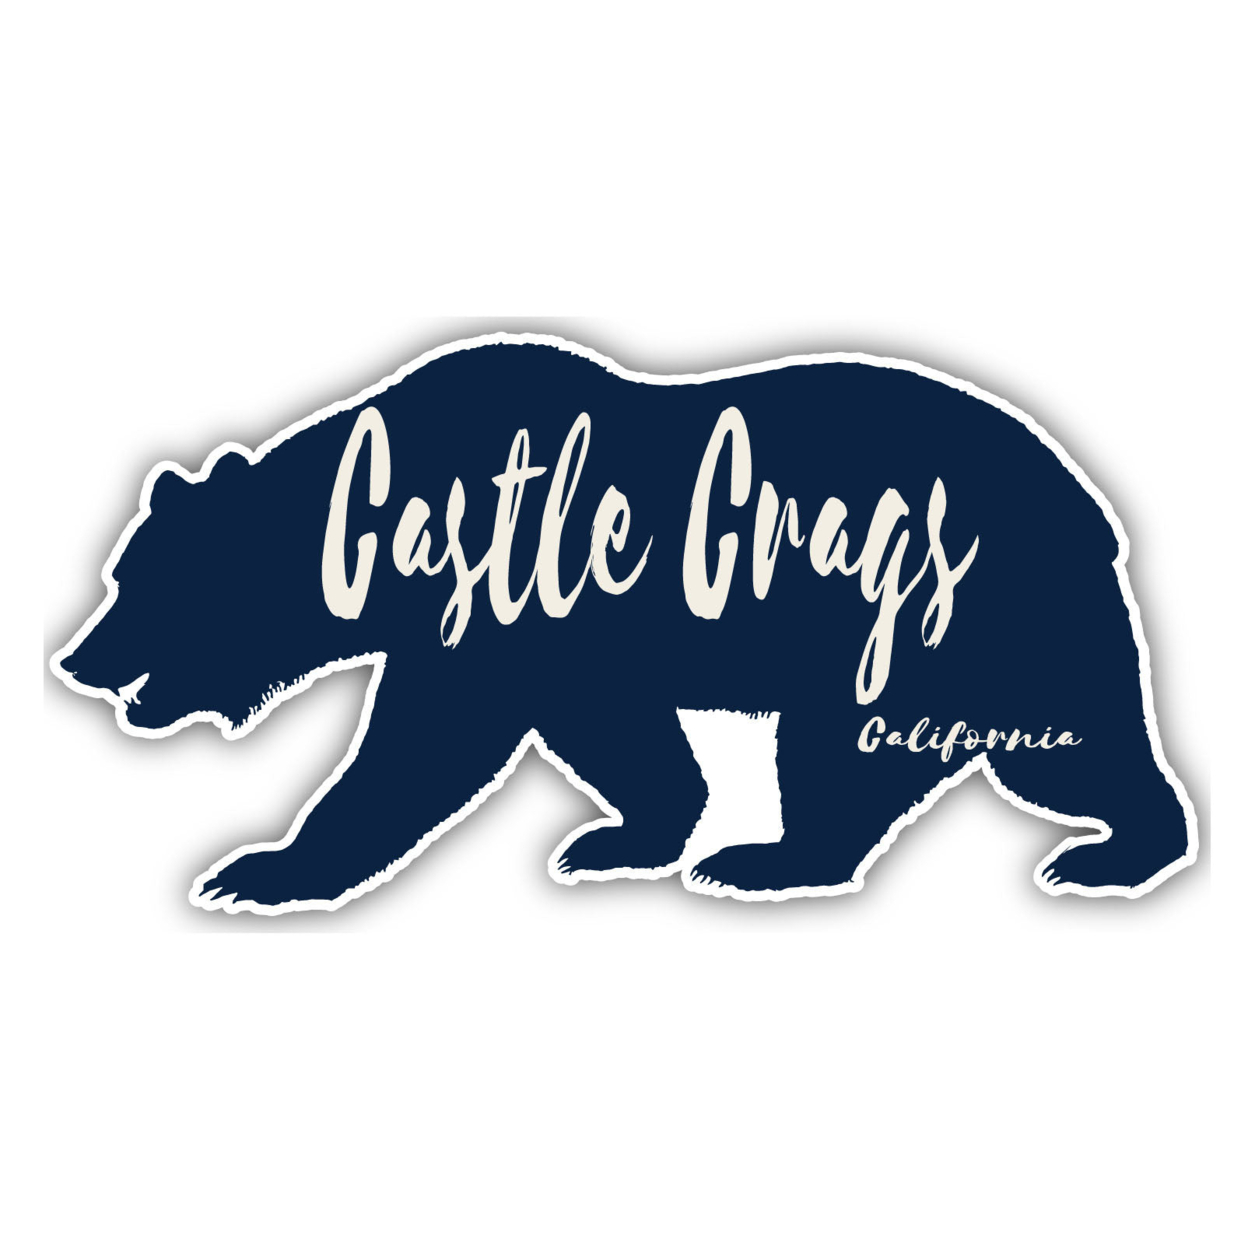 Castle Crags California Souvenir Decorative Stickers (Choose Theme And Size) - Single Unit, 12-Inch, Bear